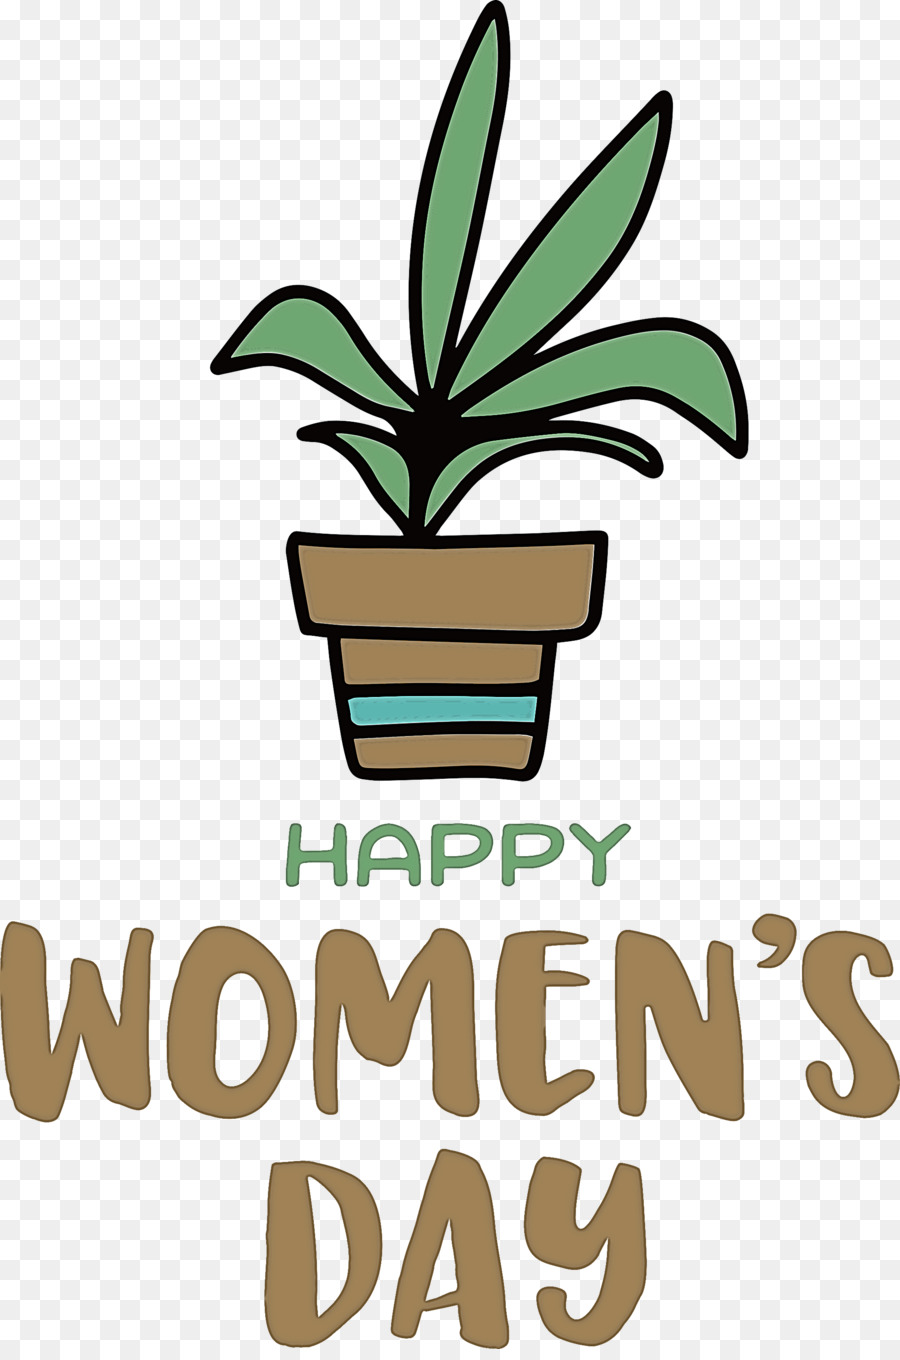 Happy Women’s Day Ngày Phụ nữ - 